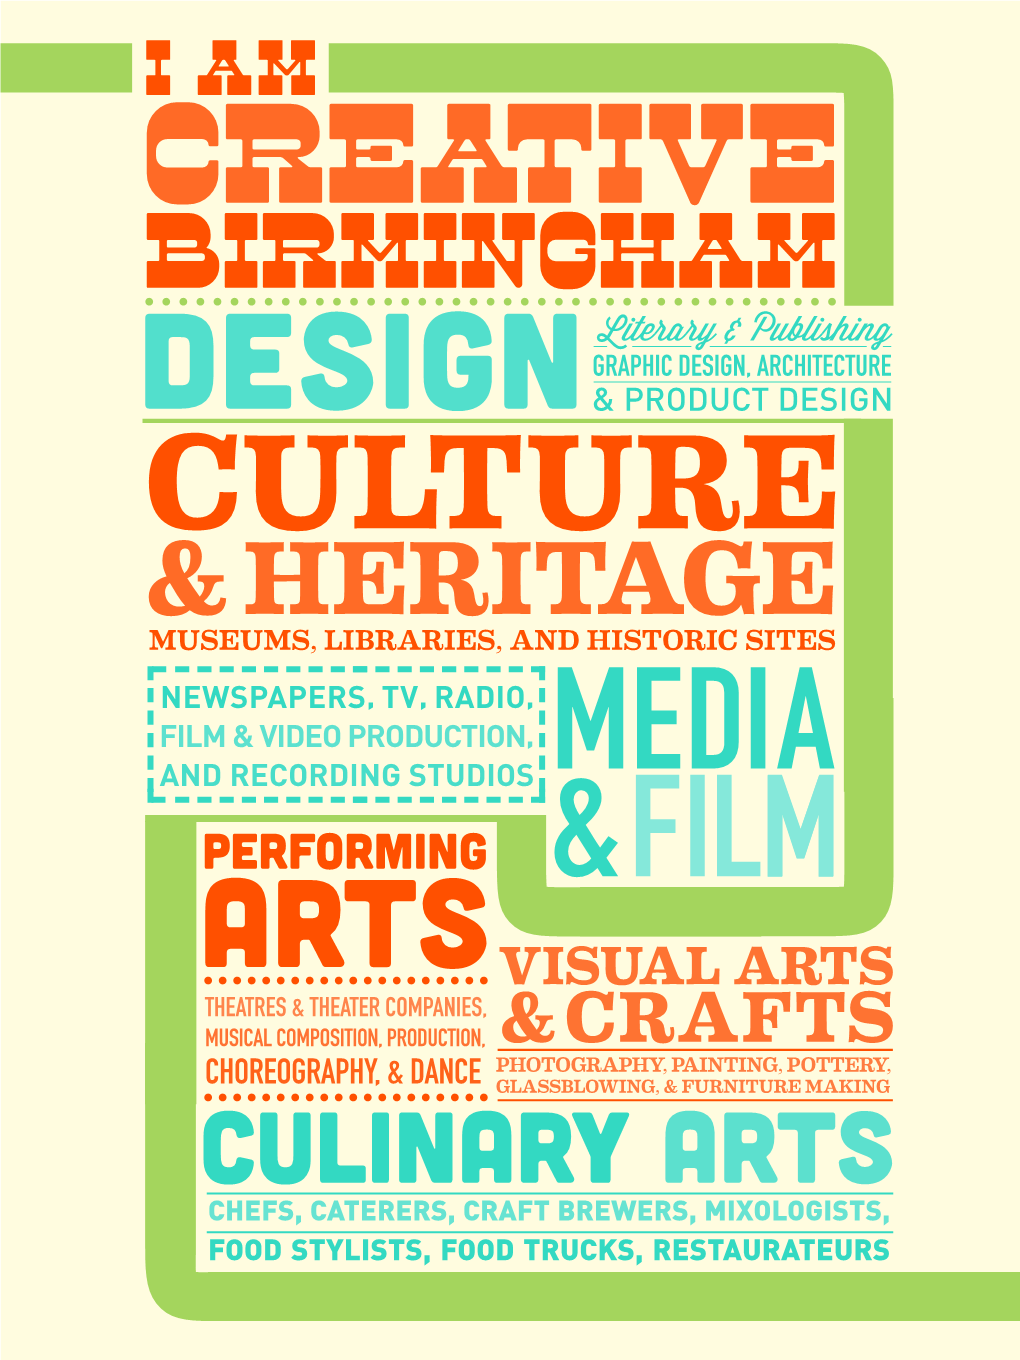 Birmingham's Creative Industries